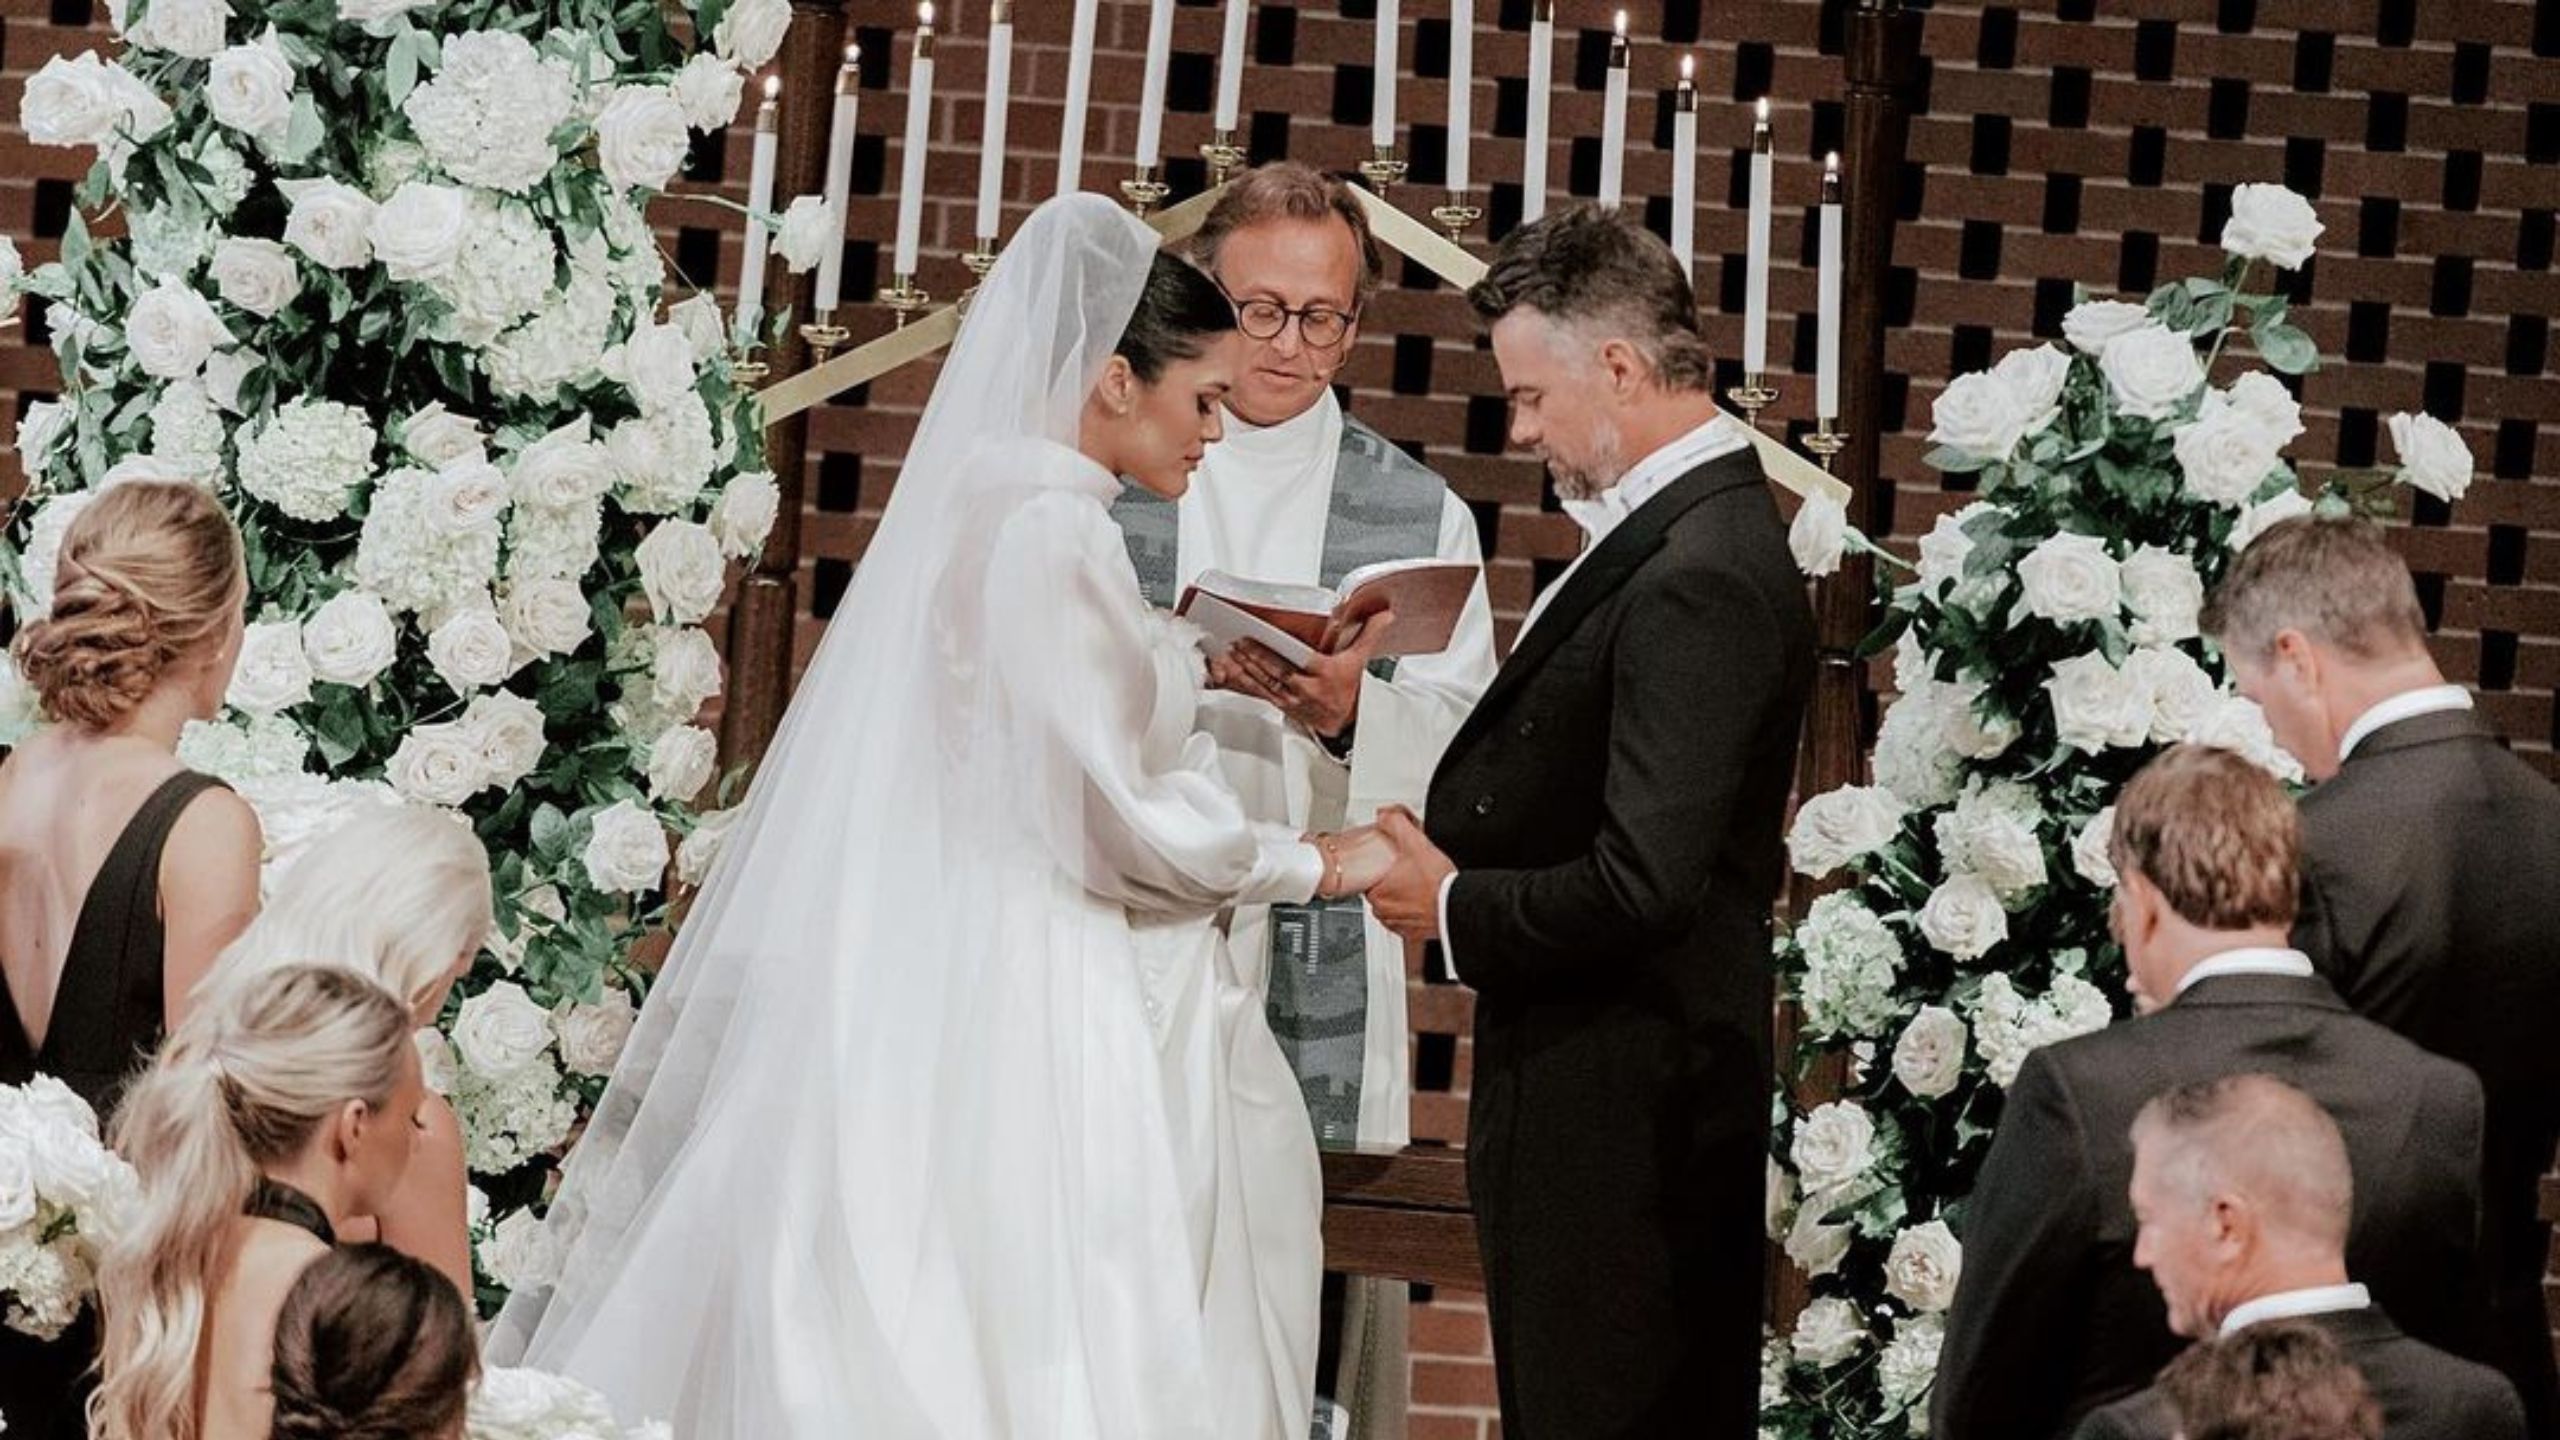 Josh Duhamel and wife Audra Mari marriage